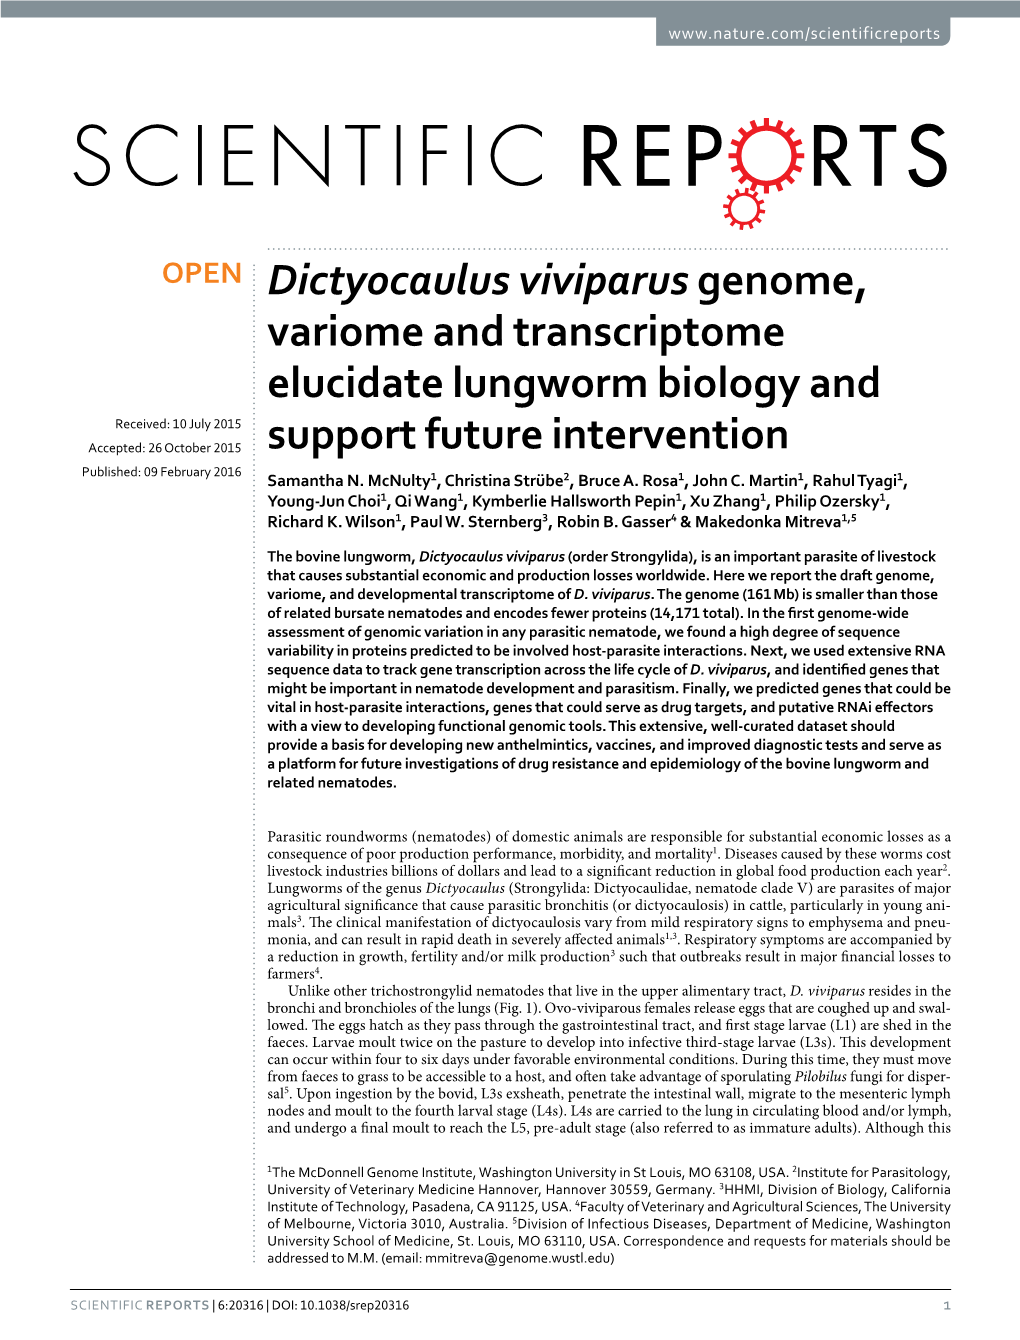 Dictyocaulus Viviparus Genome, Variome and Transcriptome